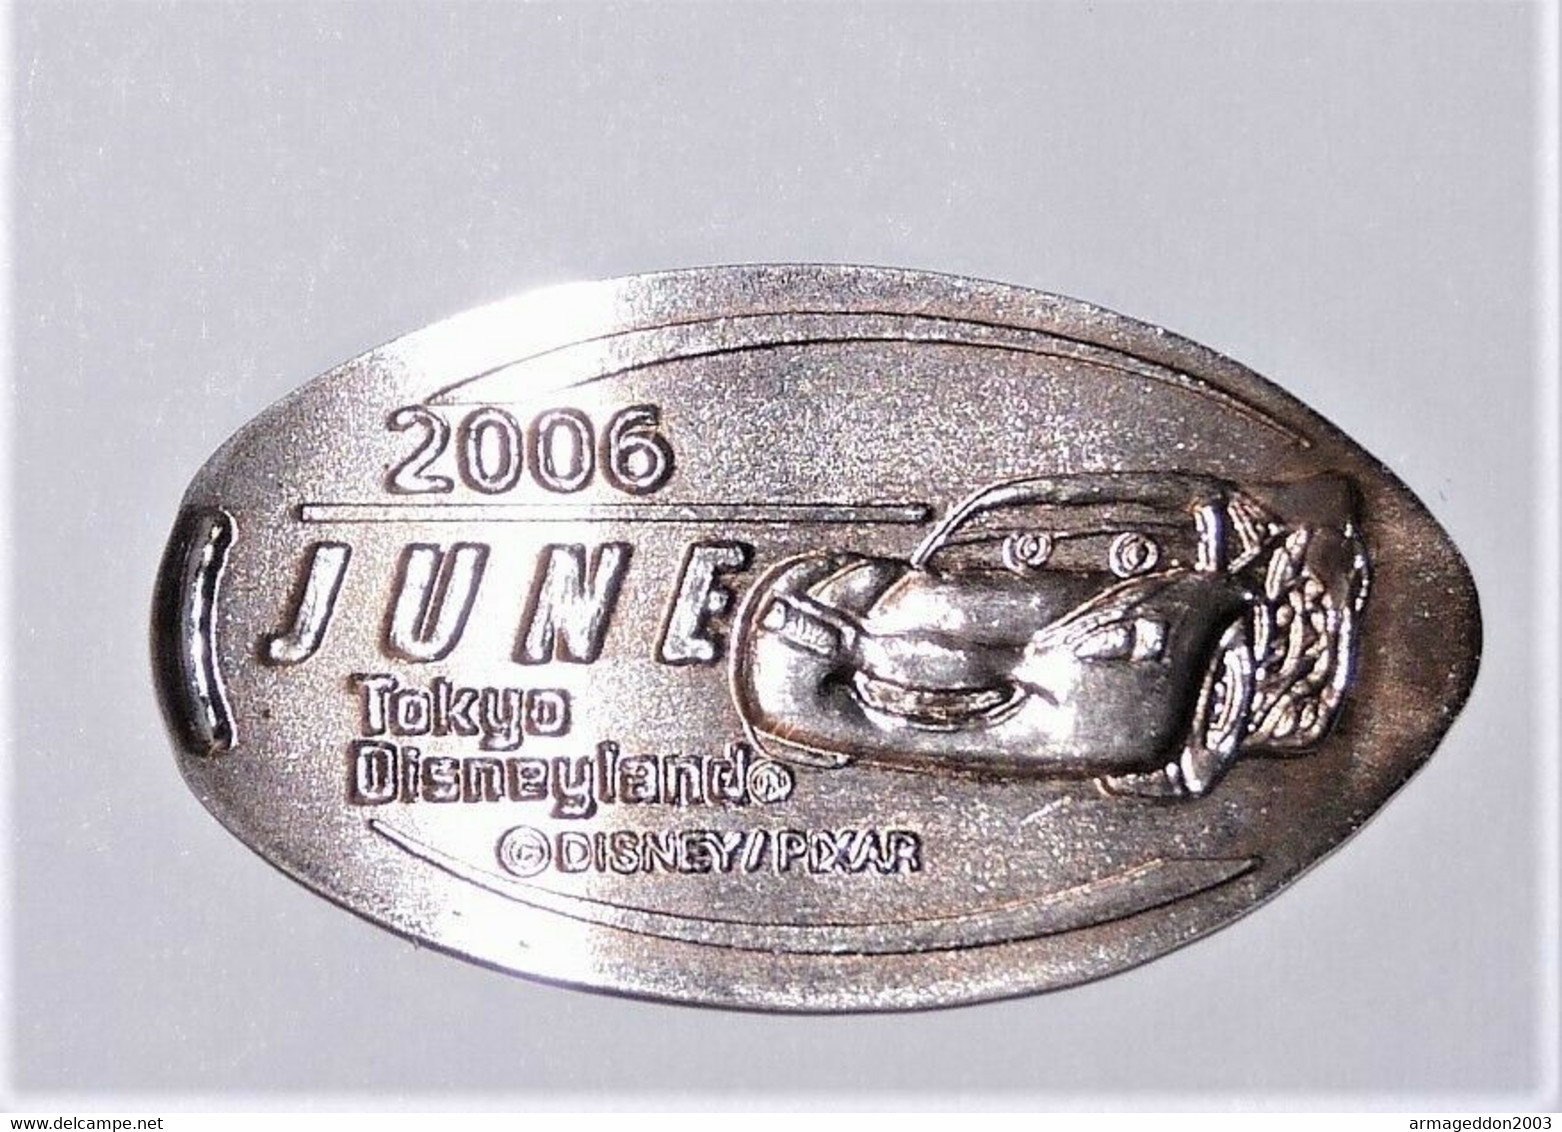 Pressed Coins Souvenir Medallion Médaillon Medaille Cars 2006 Pixar Disney - Souvenir-Medaille (elongated Coins)